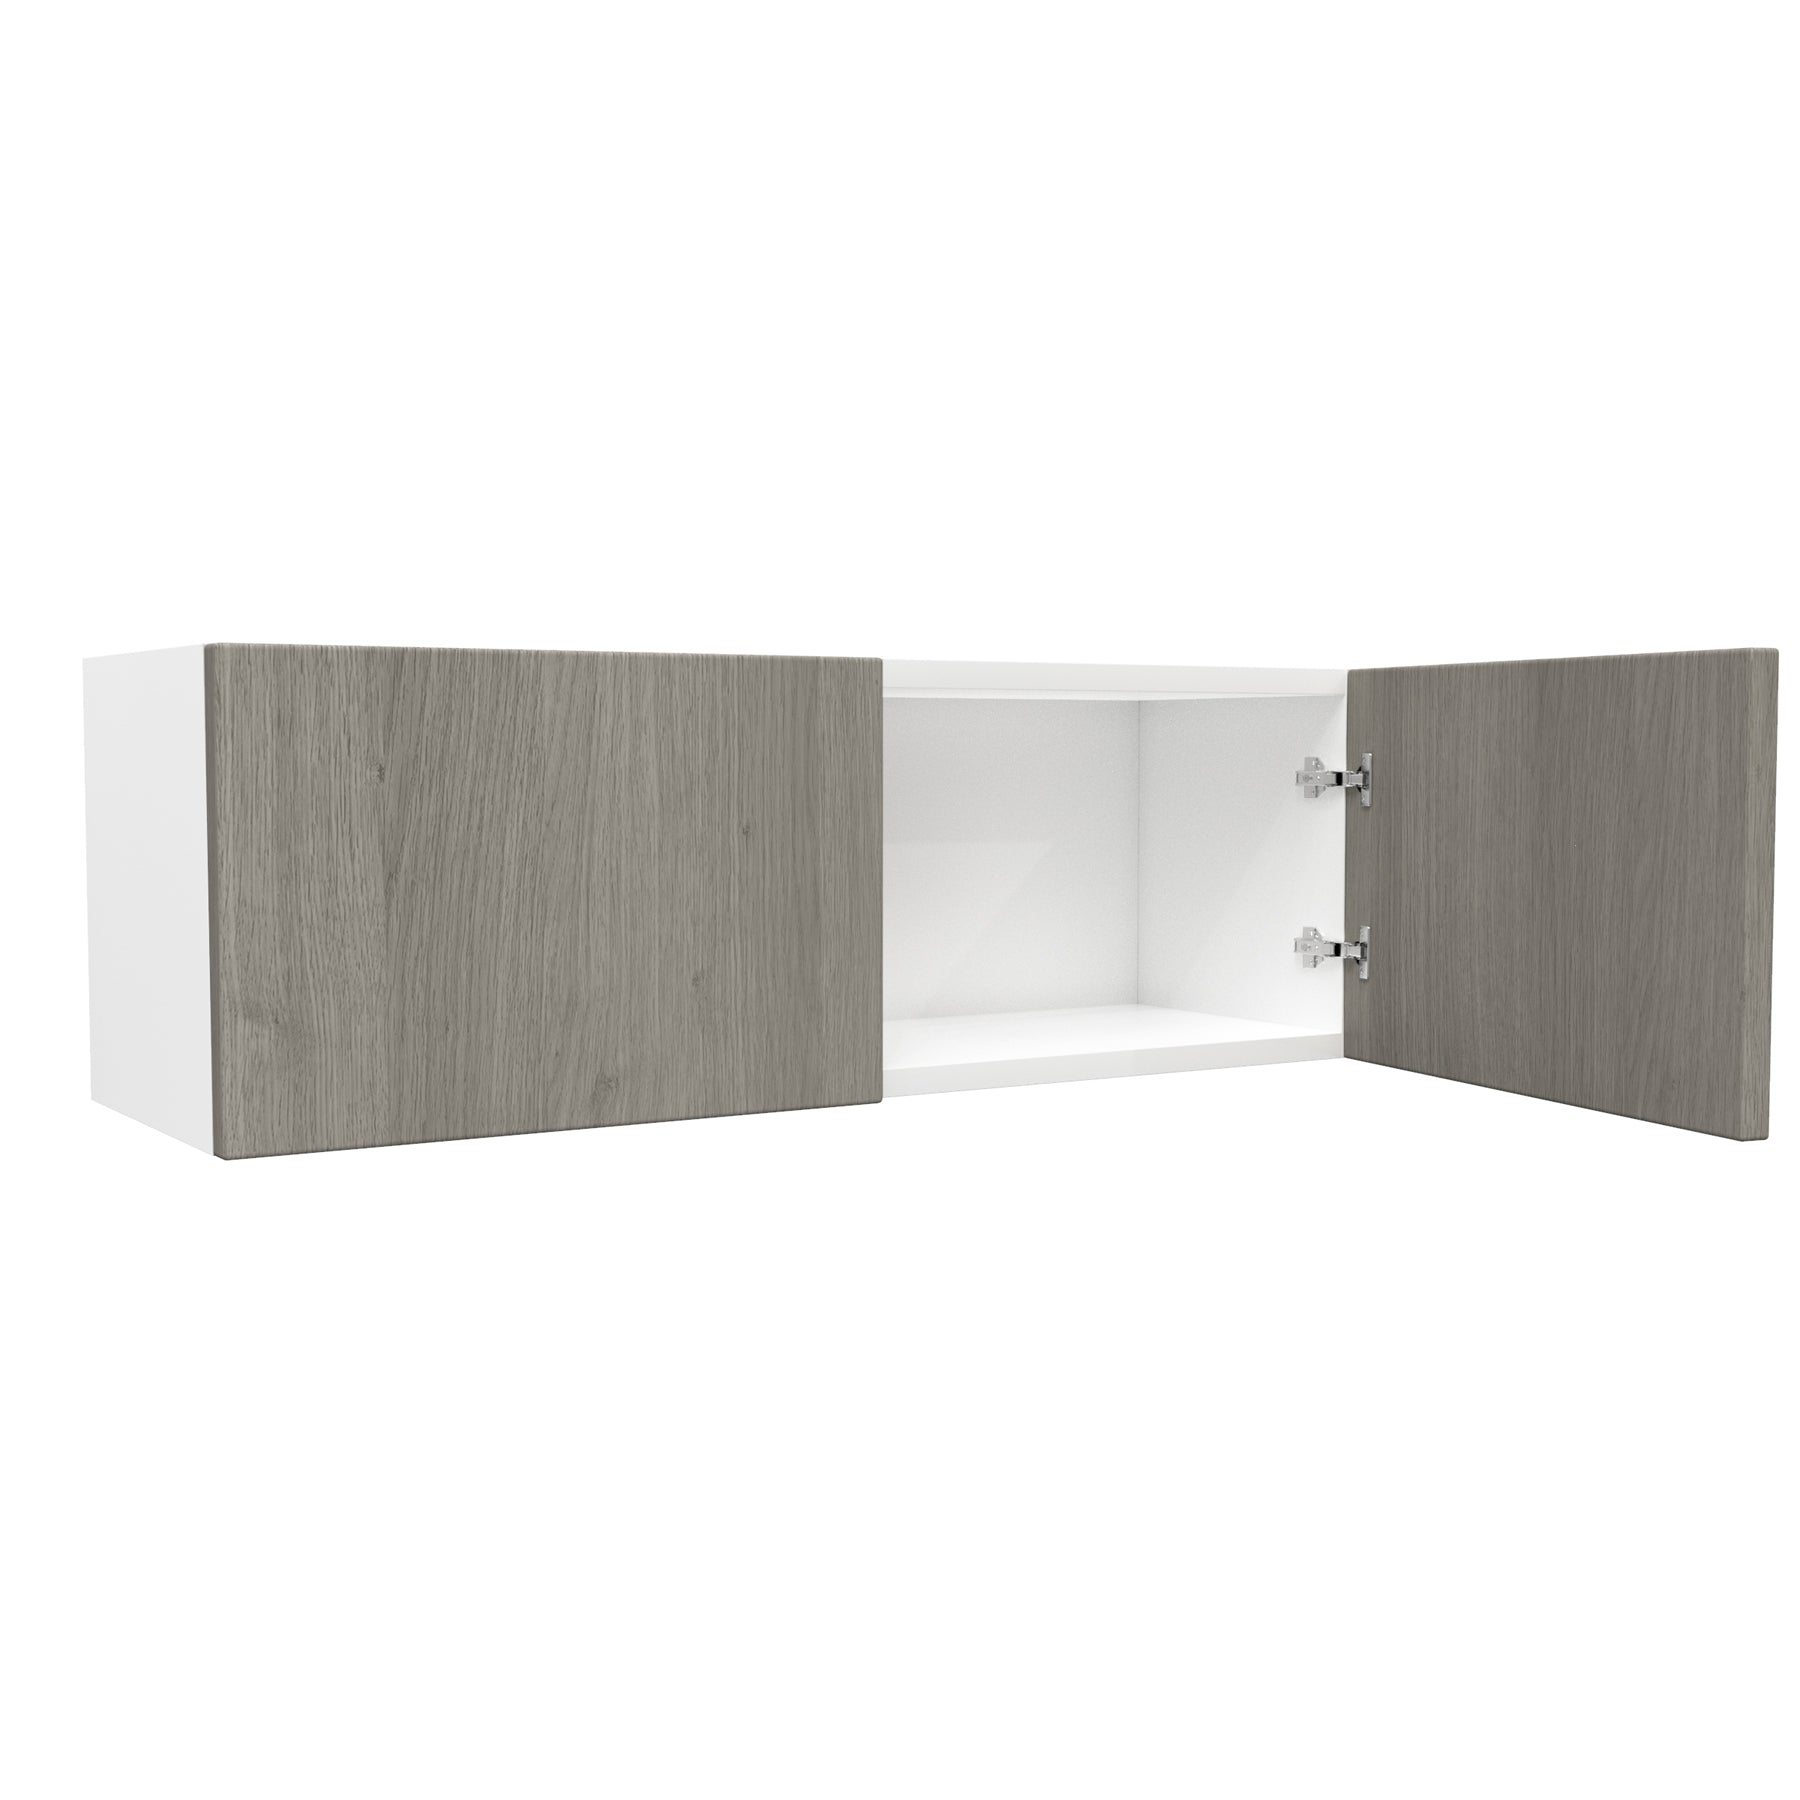 2 Door Wall Cabinet| Matrix Silver | 36W x 12H x 12D